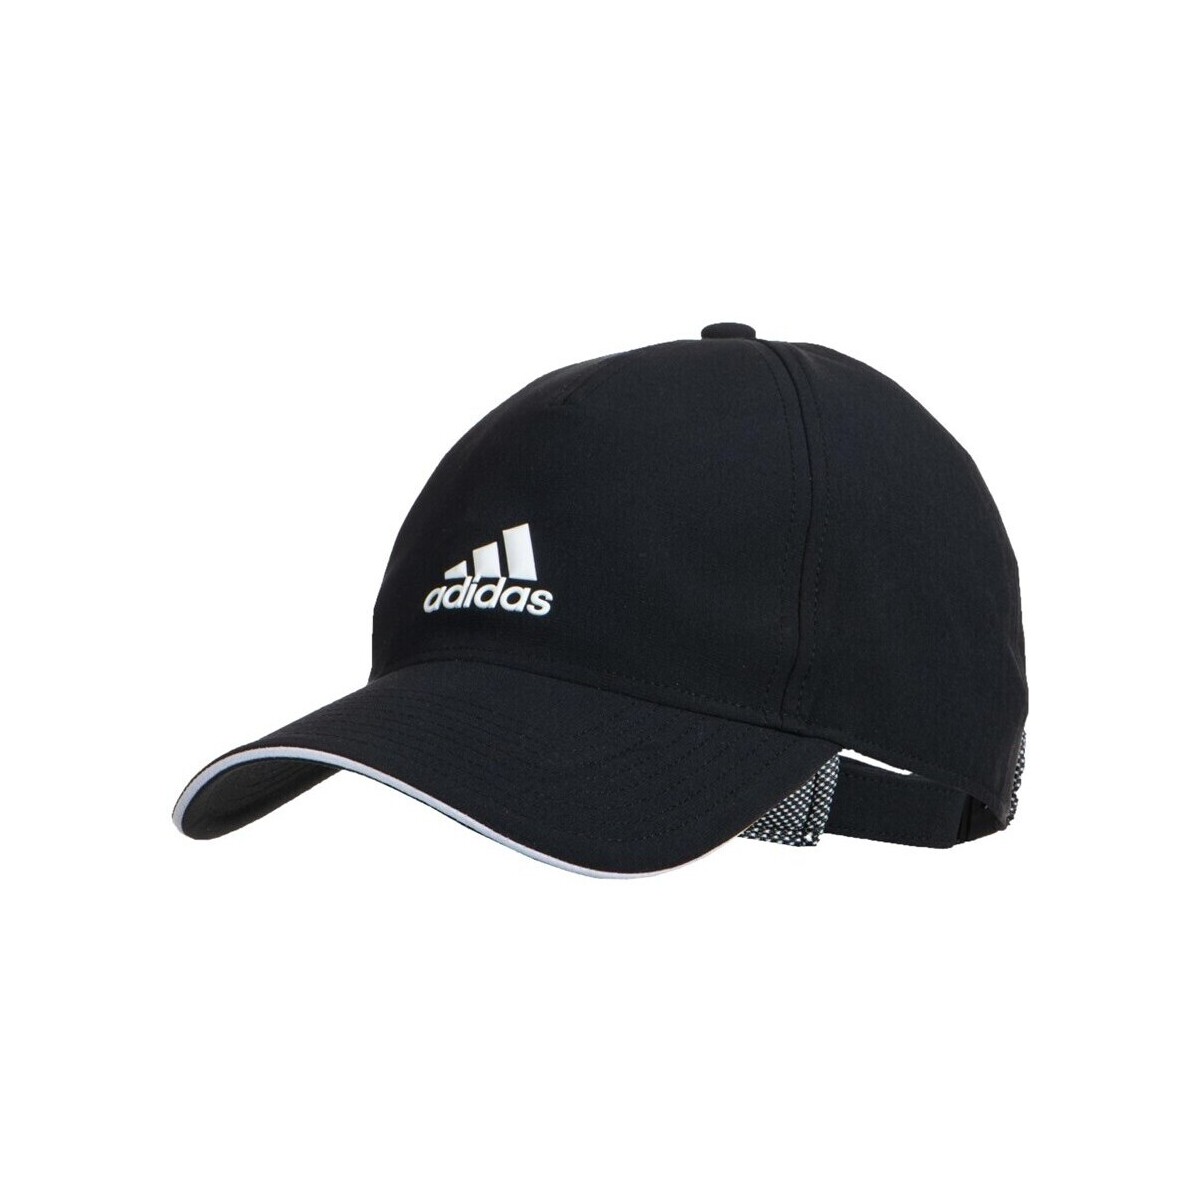 Clothes accessories Caps adidas Originals Aeroready Baseball Cap Black